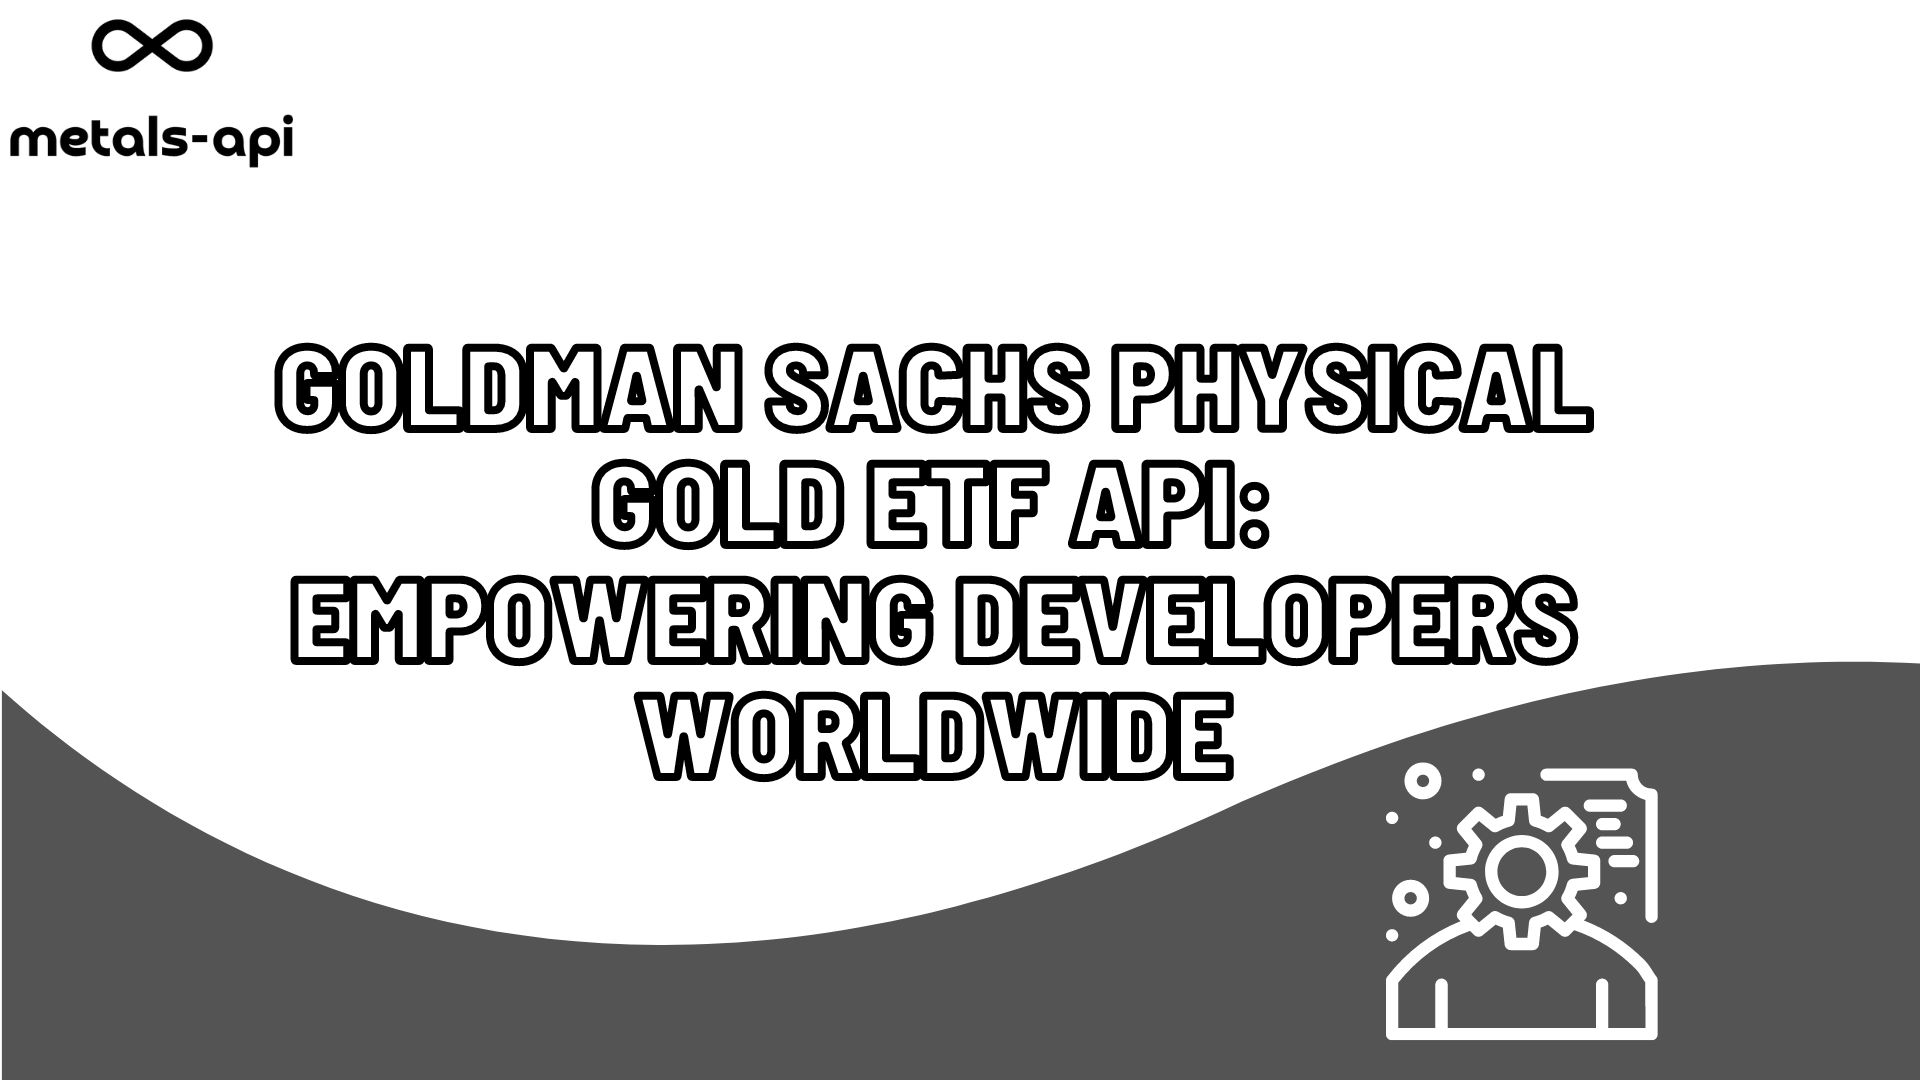 Goldman Sachs Physical Gold ETF API: Empowering Developers Worldwide